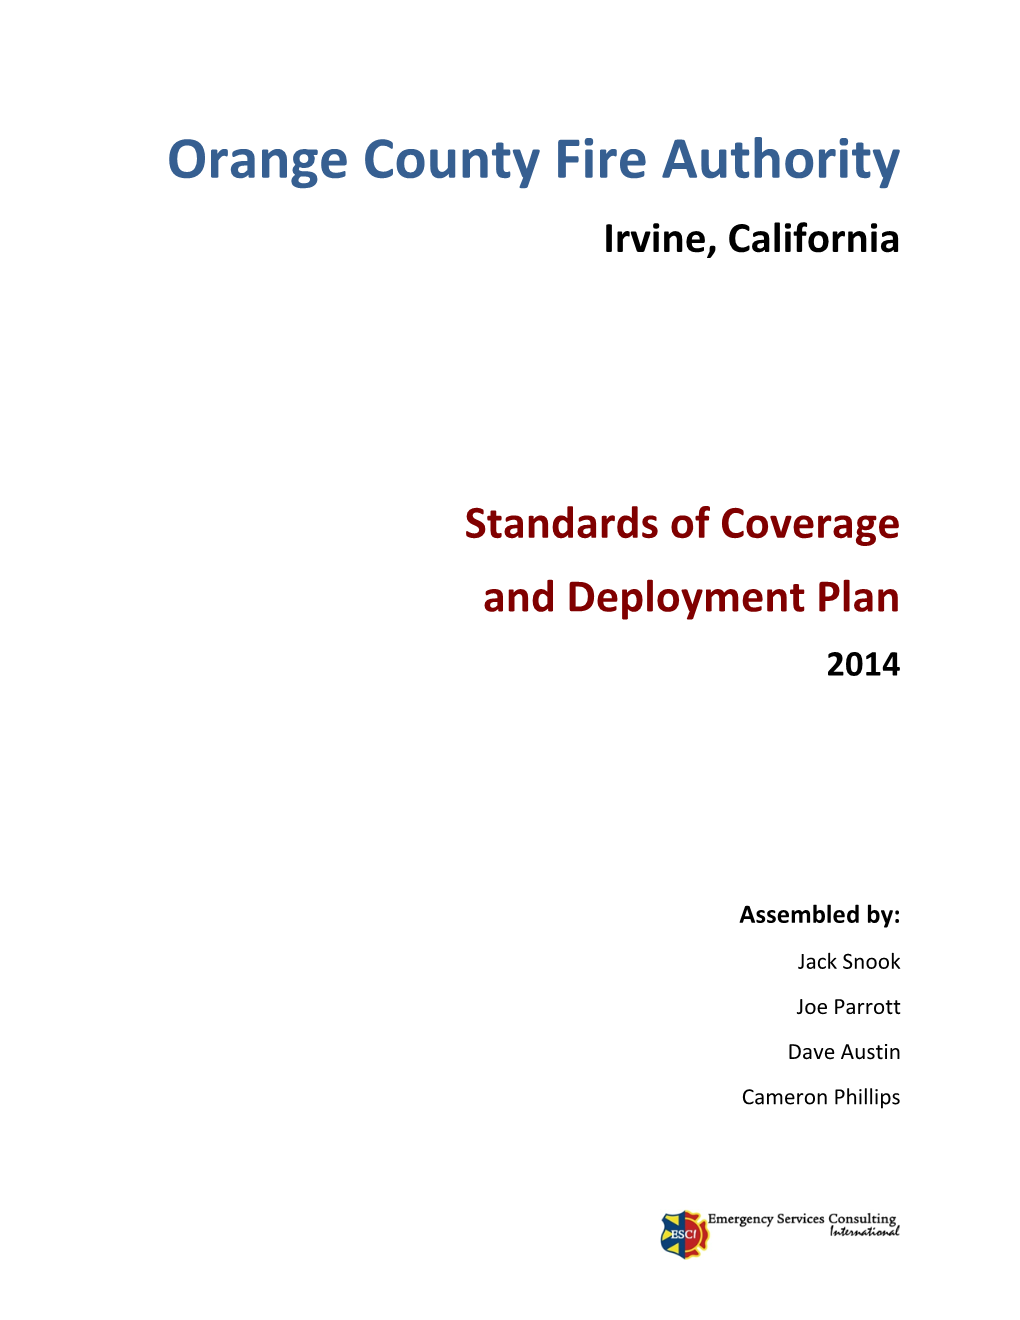 Orange County Fire Authority Irvine, California Standards of Coverage